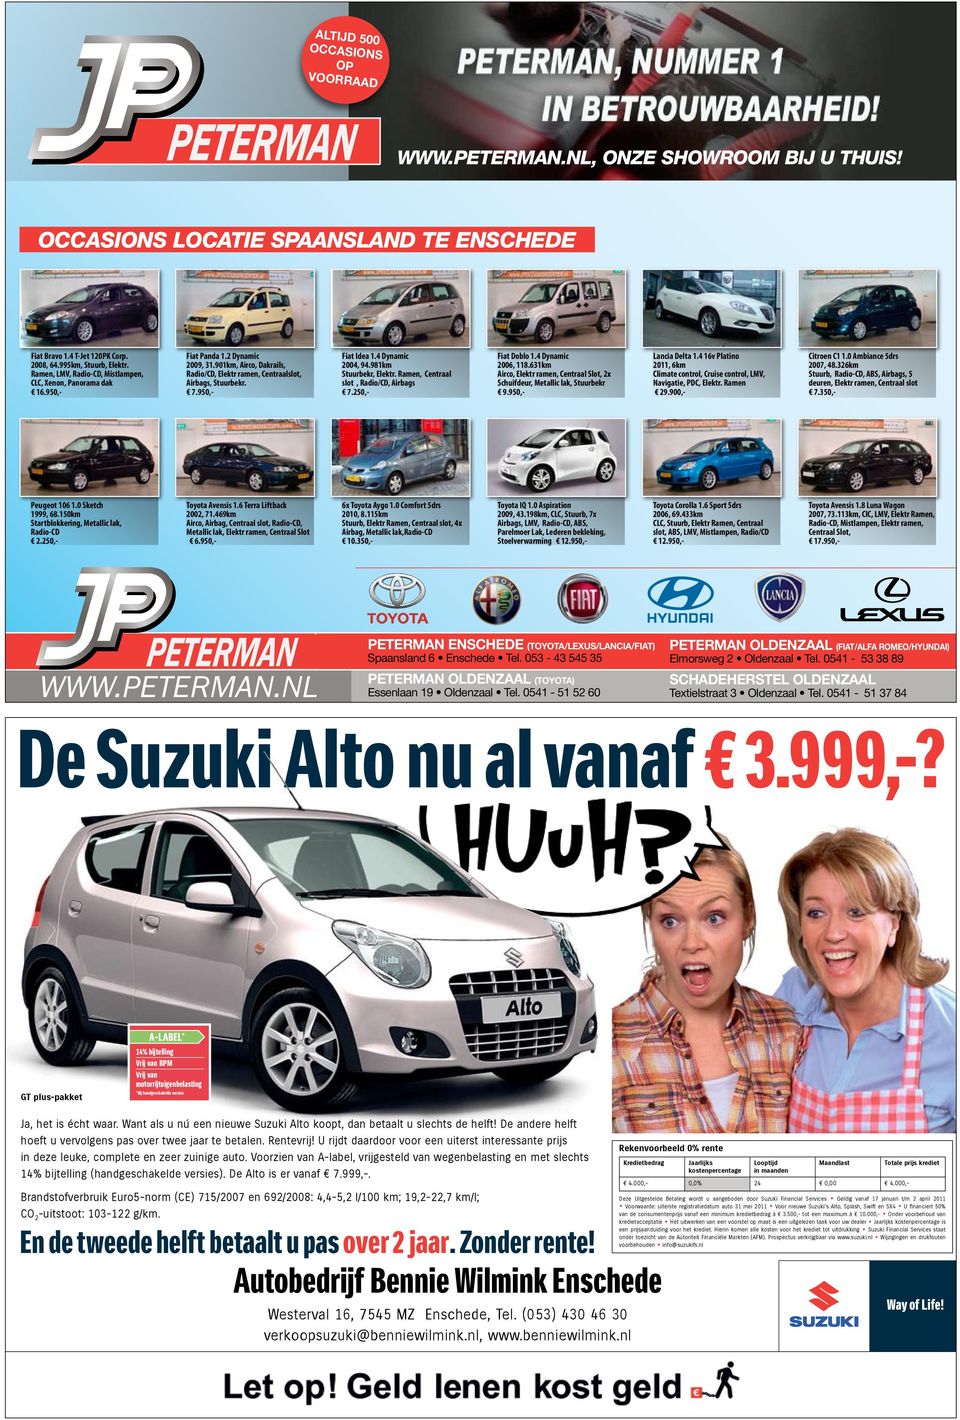 950,- Fiat Idea 1.4 Dynamic 2004, 94.981km Stuurbekr, Elektr. Ramen, Centraal slot, Radio/CD, Airbags 7.250,- Fiat Doblo 1.4 Dynamic 2006, 118.